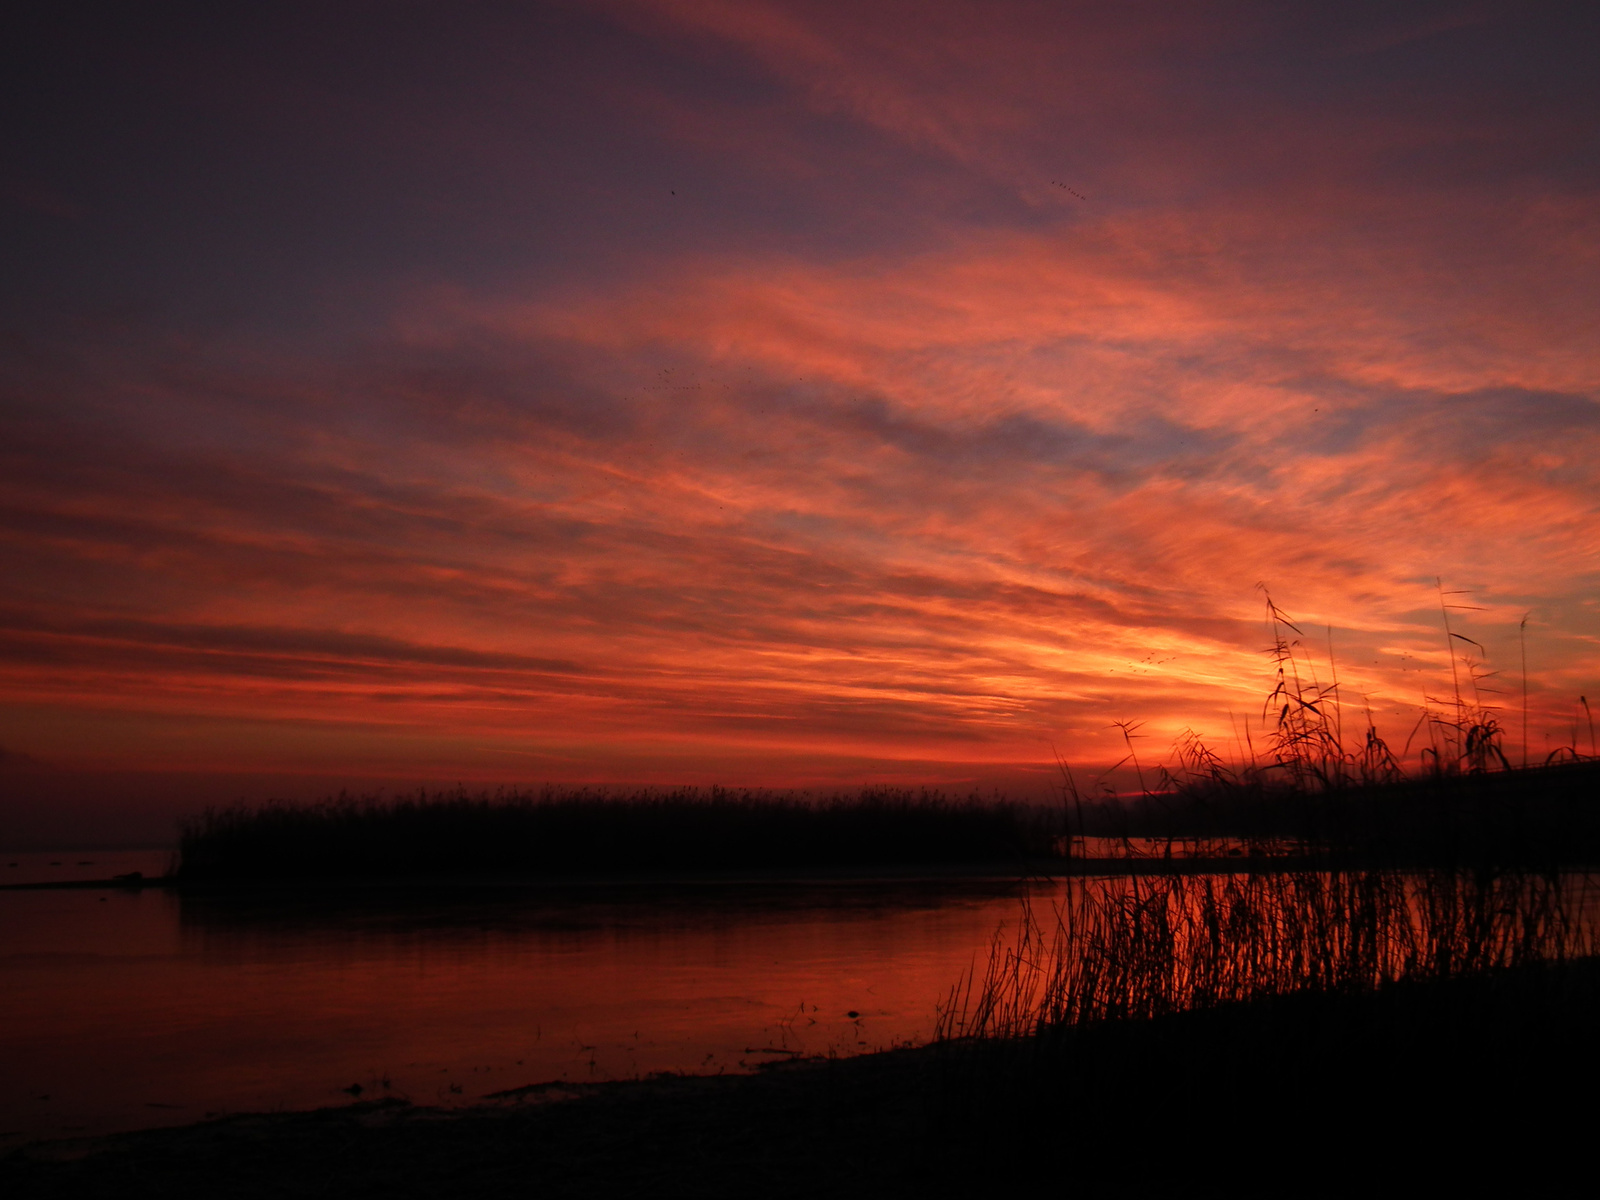 Tisza-tó. Napkelte.